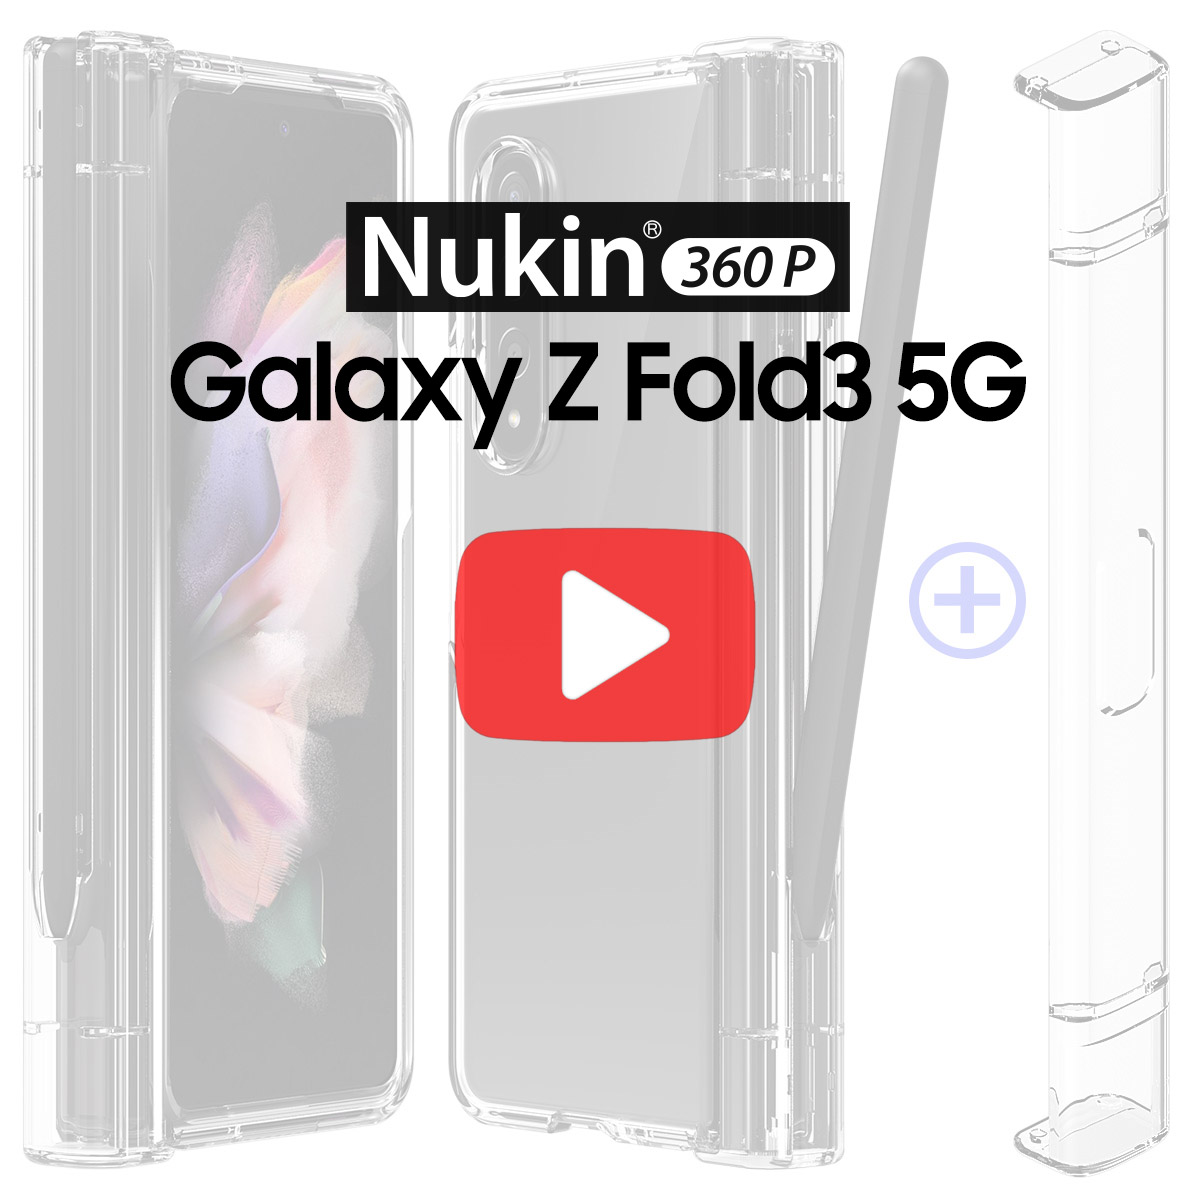 [Galaxy Z Fold3 5G] Nukin 360P